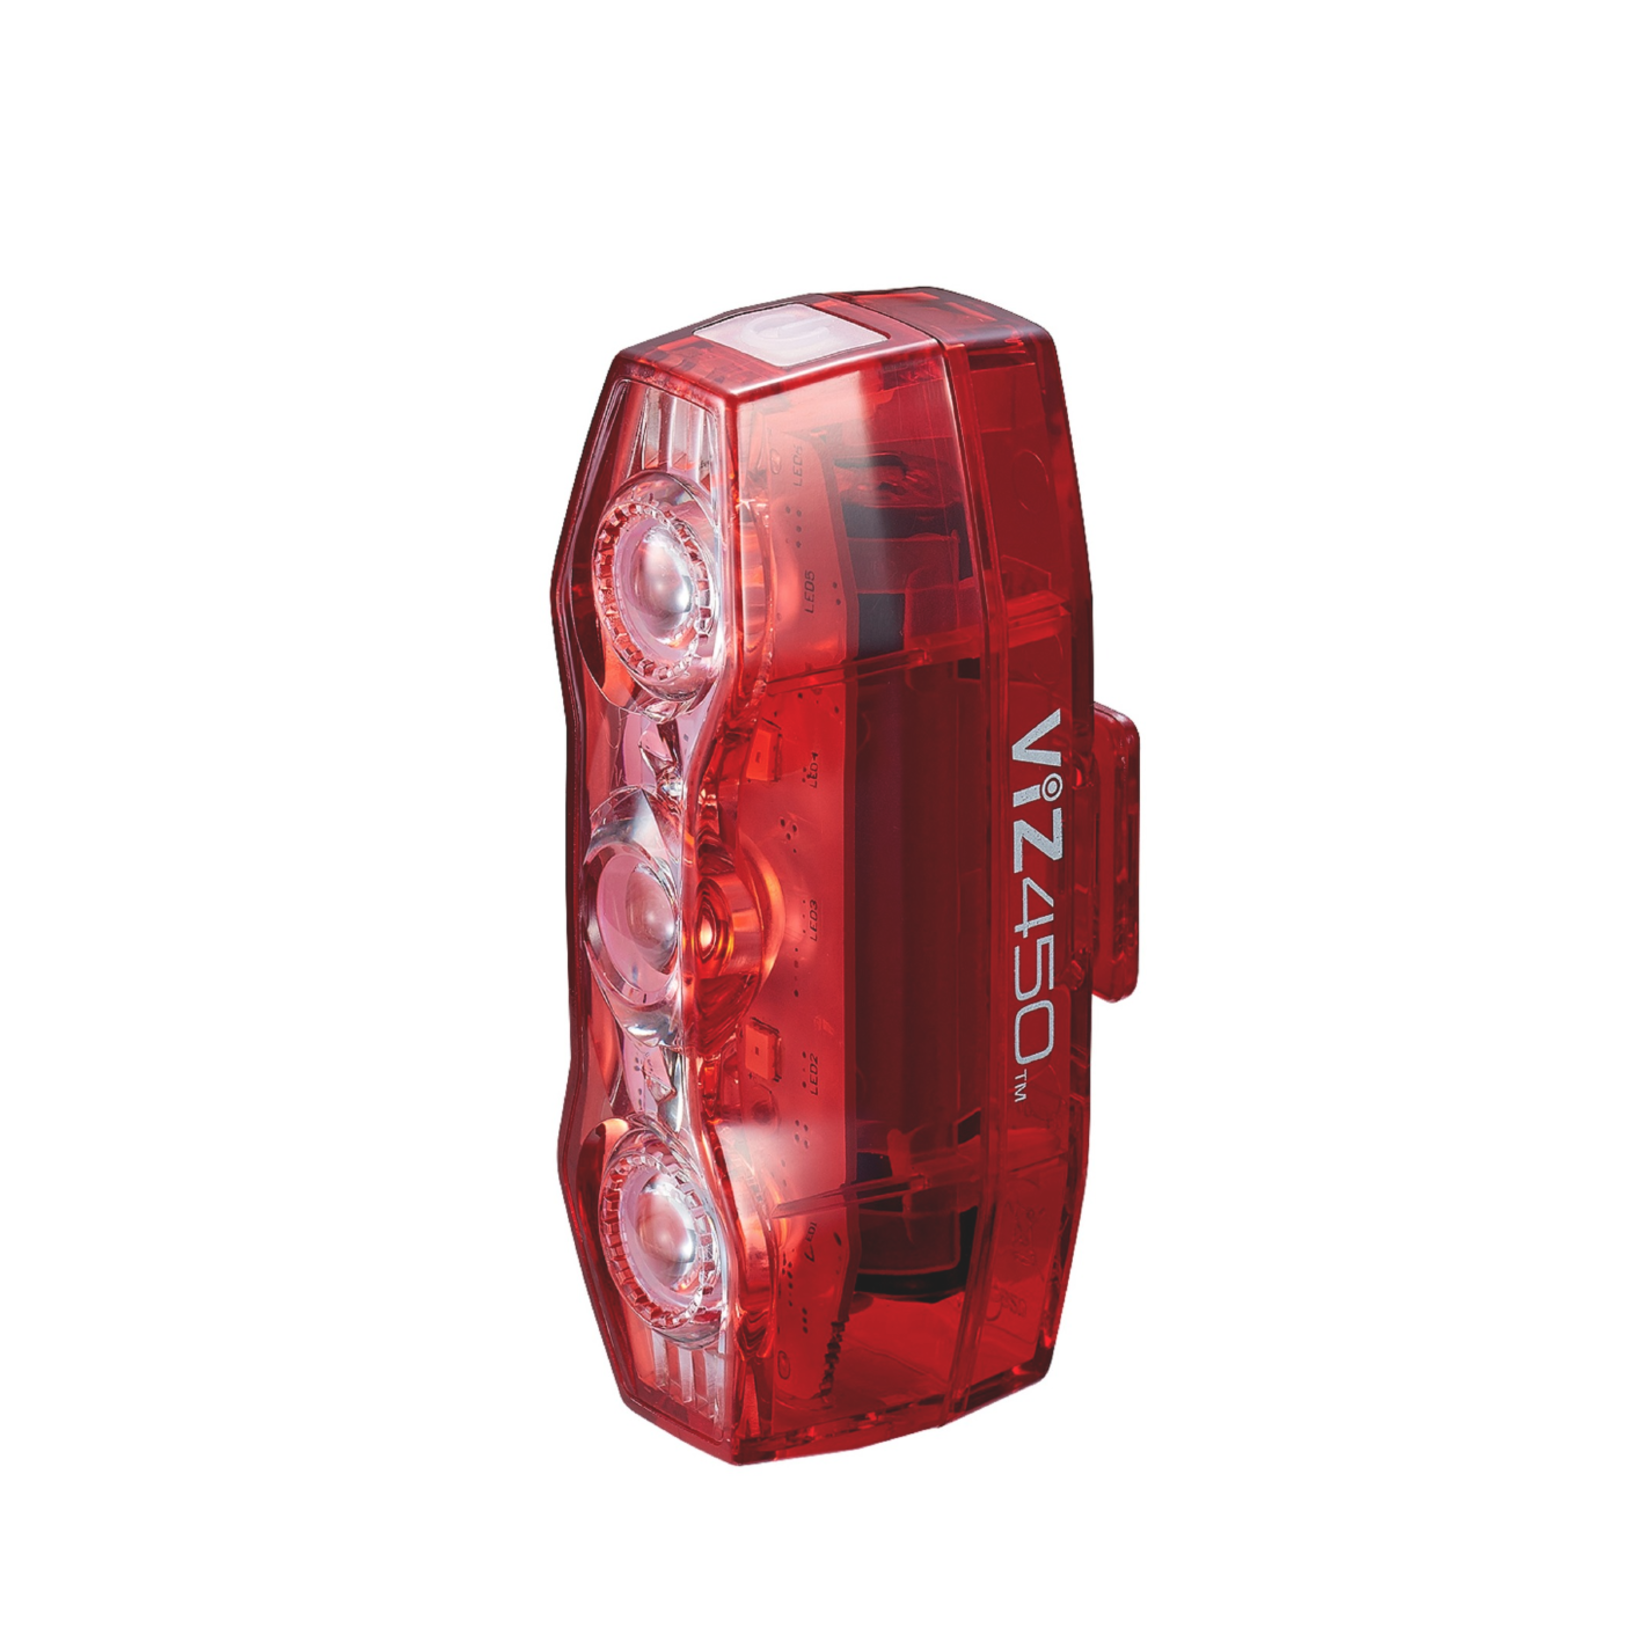 Cateye ViZ450 Rear Light